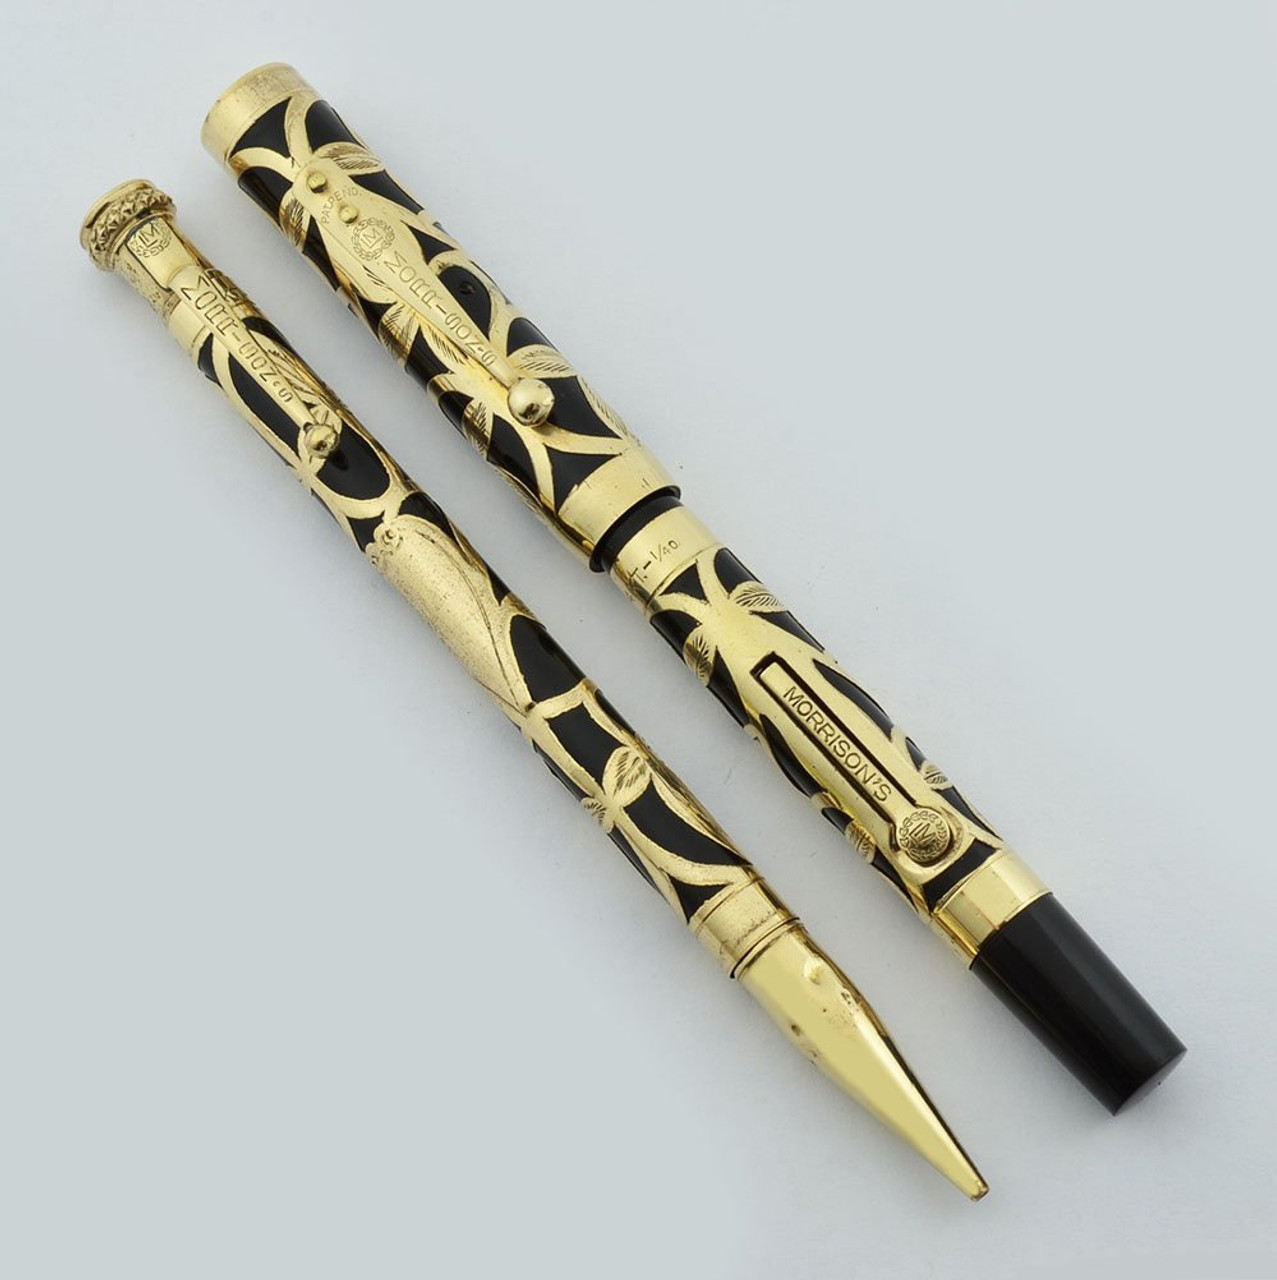 Morrison Fountain Pen Set - Full Size, Gold Filled Filigree Overlay, Flexible Fine (Excellent, Restored)